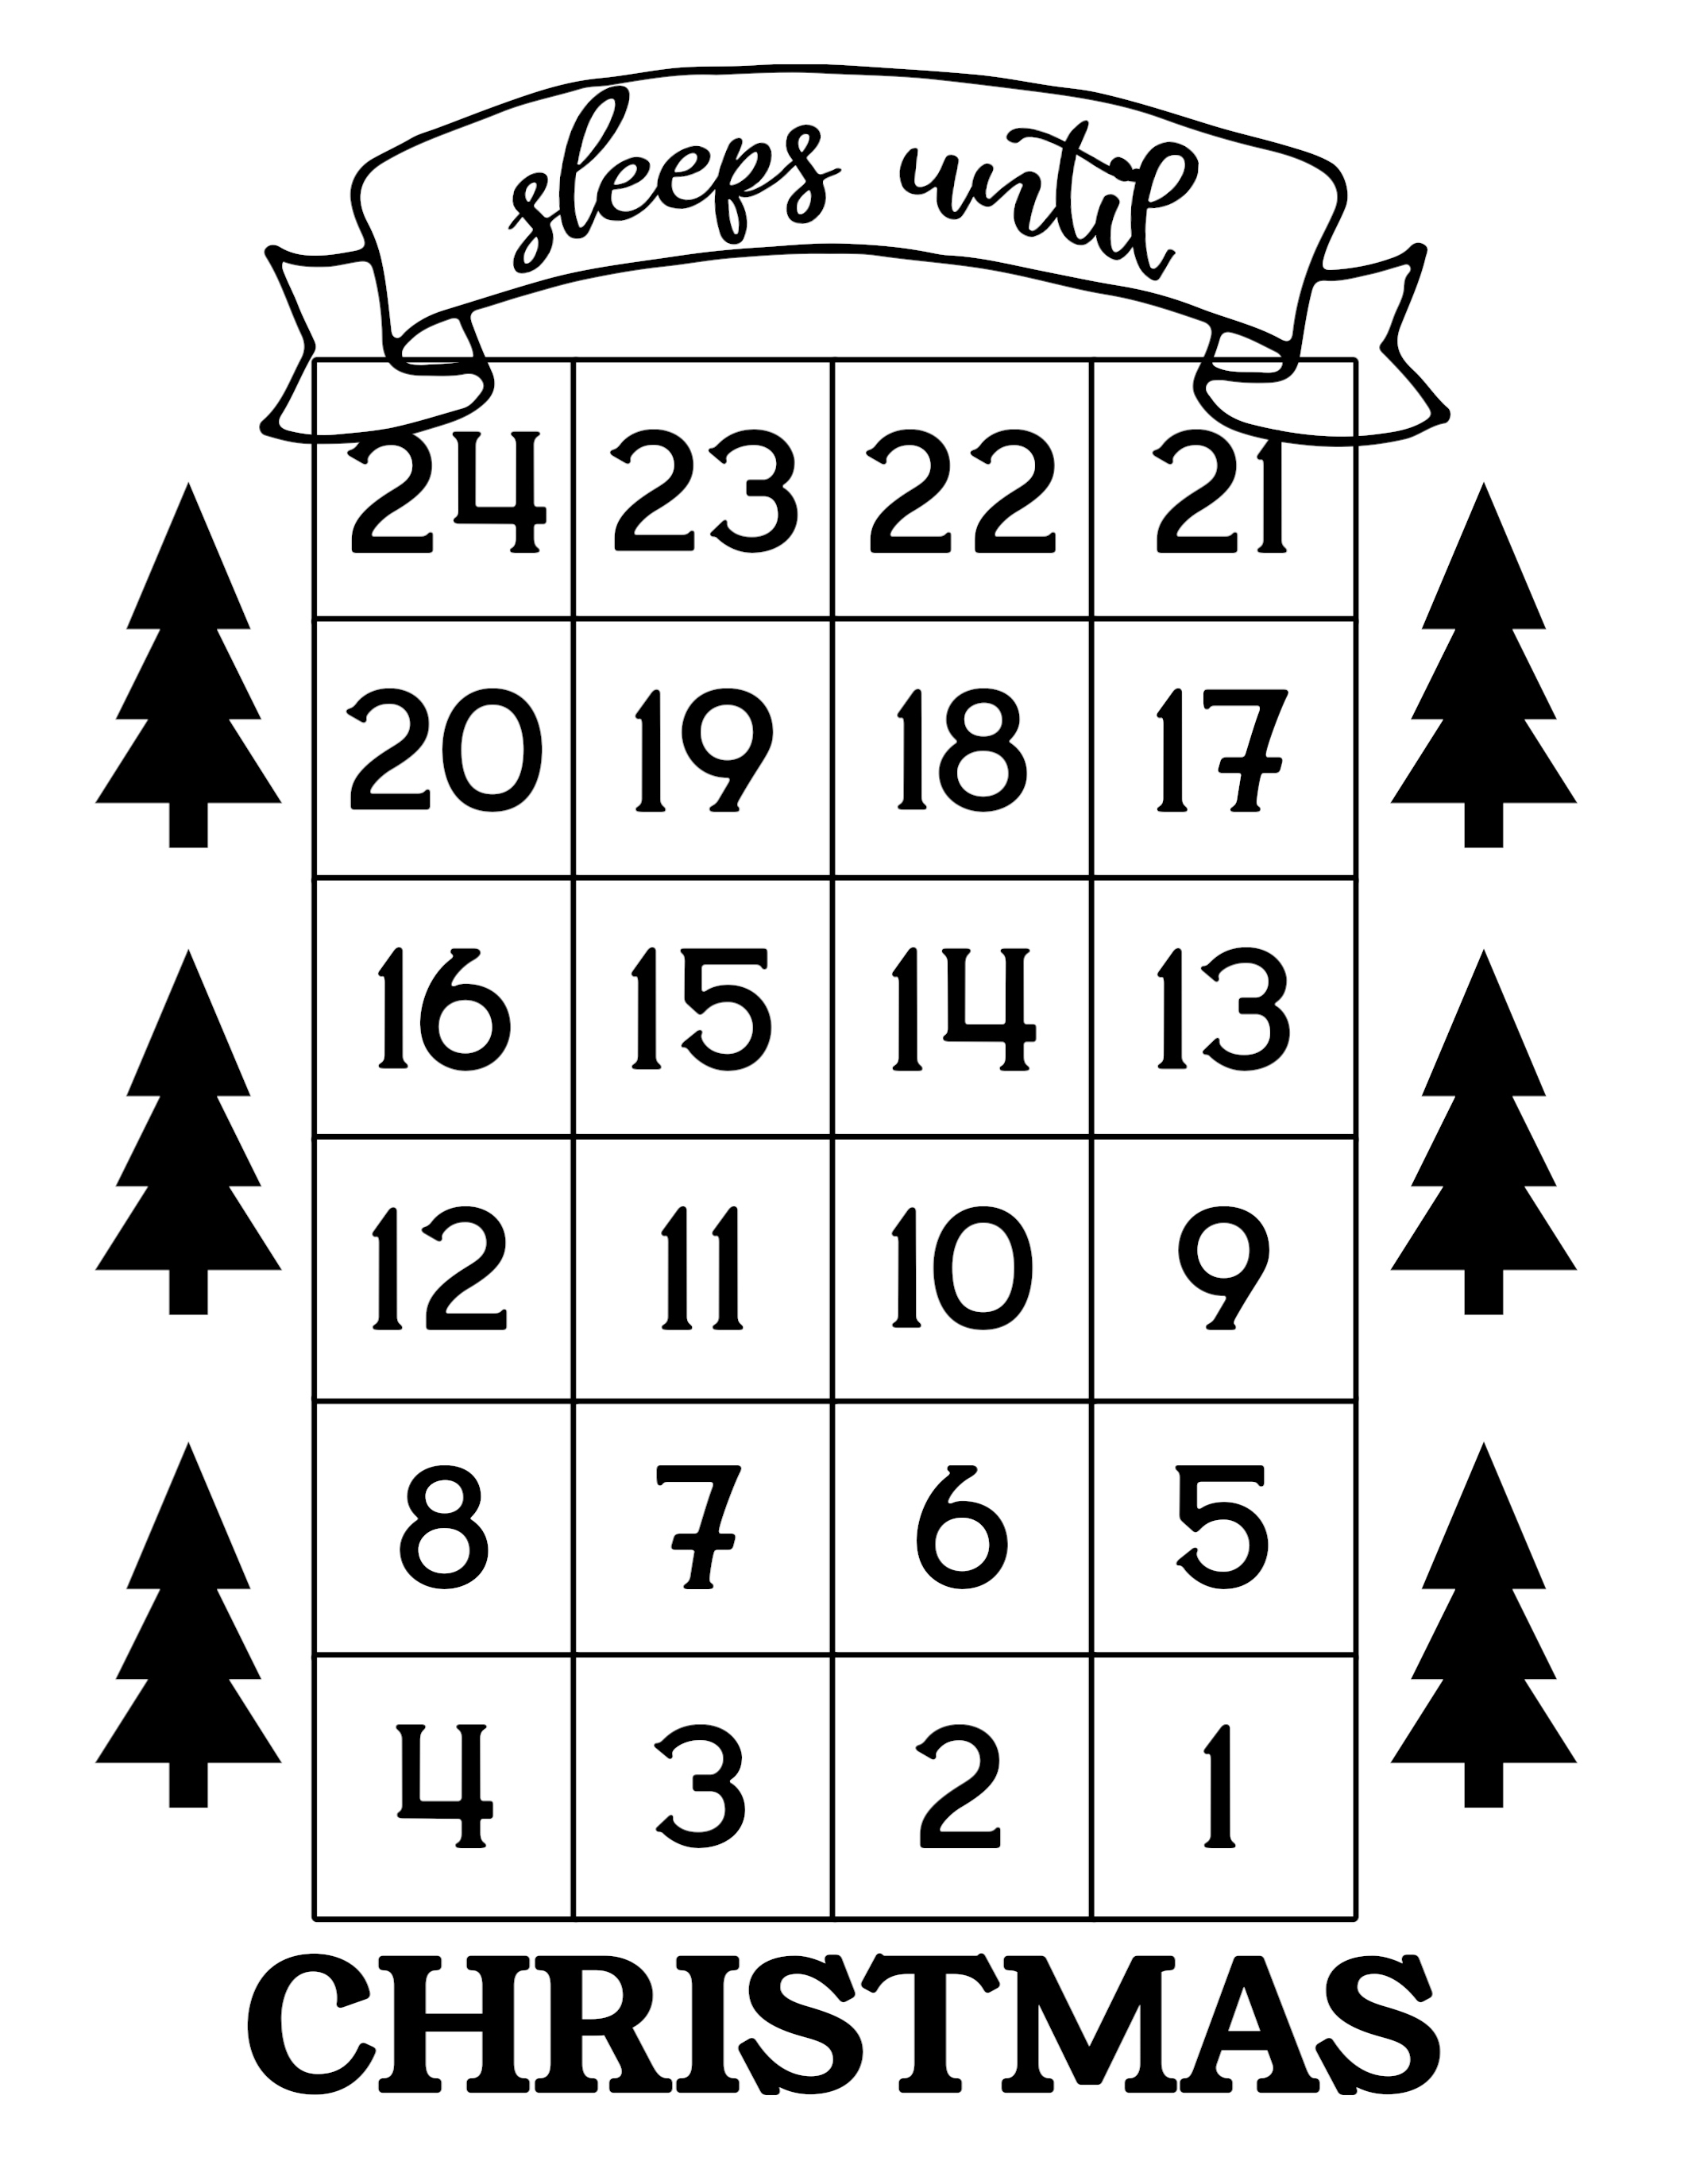 How Many Days Until Christmas Free Printable - Paper Trail Impressive Free Printable Christmas Countdown Calendar 2020